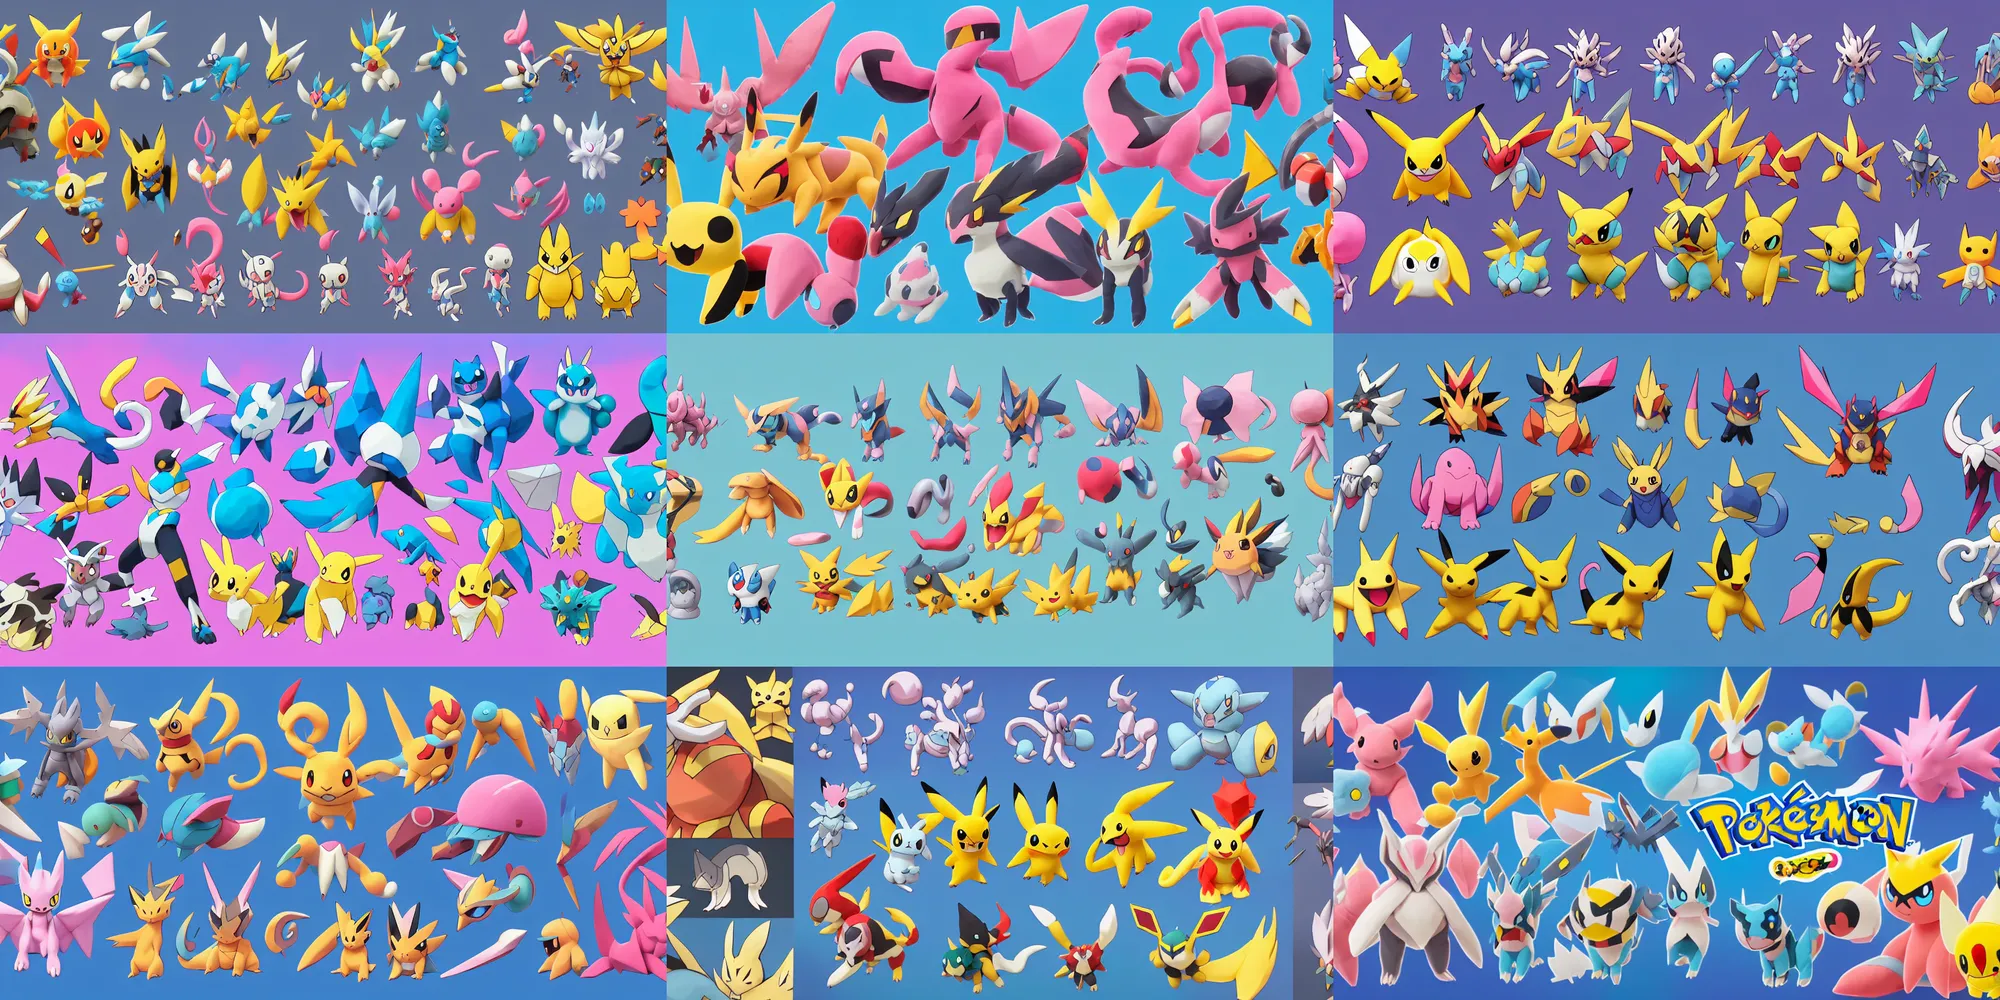 the pokemon gumshoos, digital art, Stable Diffusion